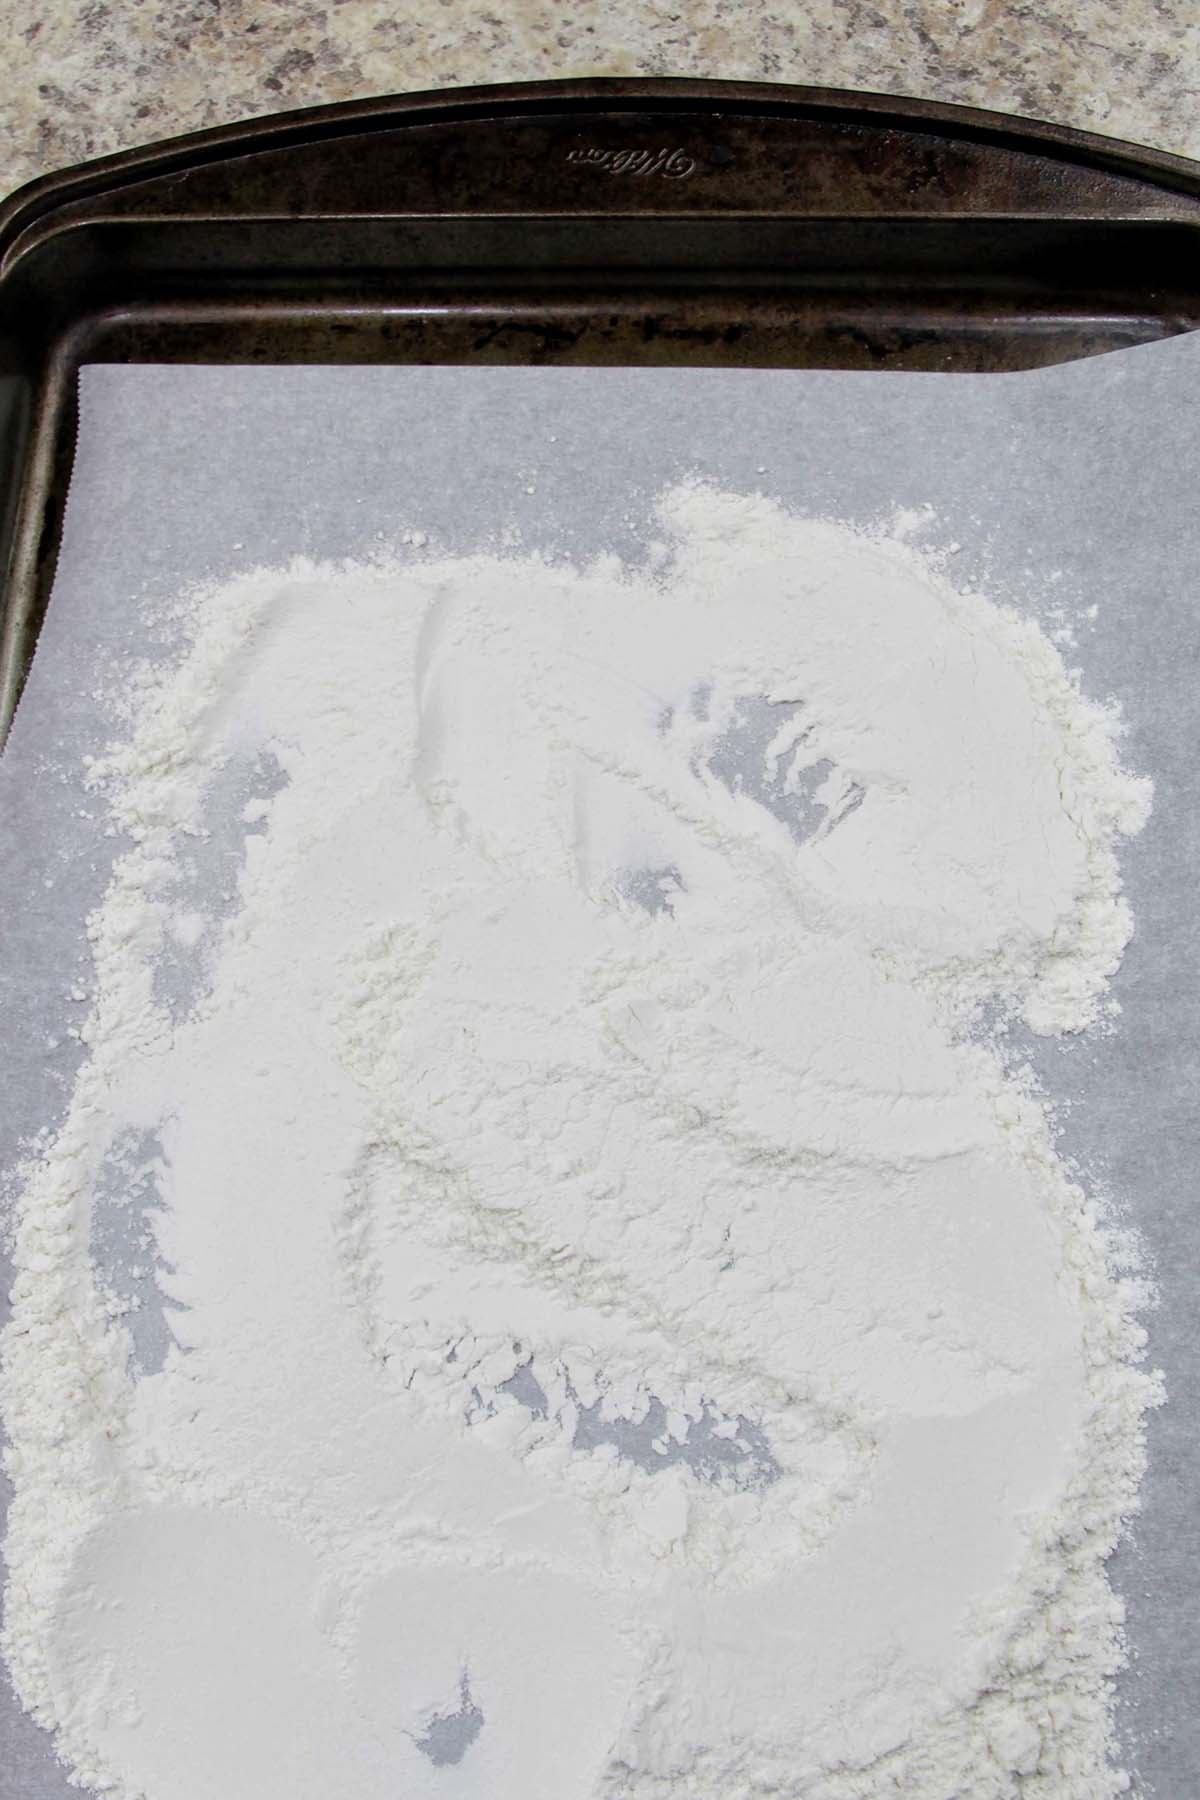 flour on a parchment lined baking sheet.